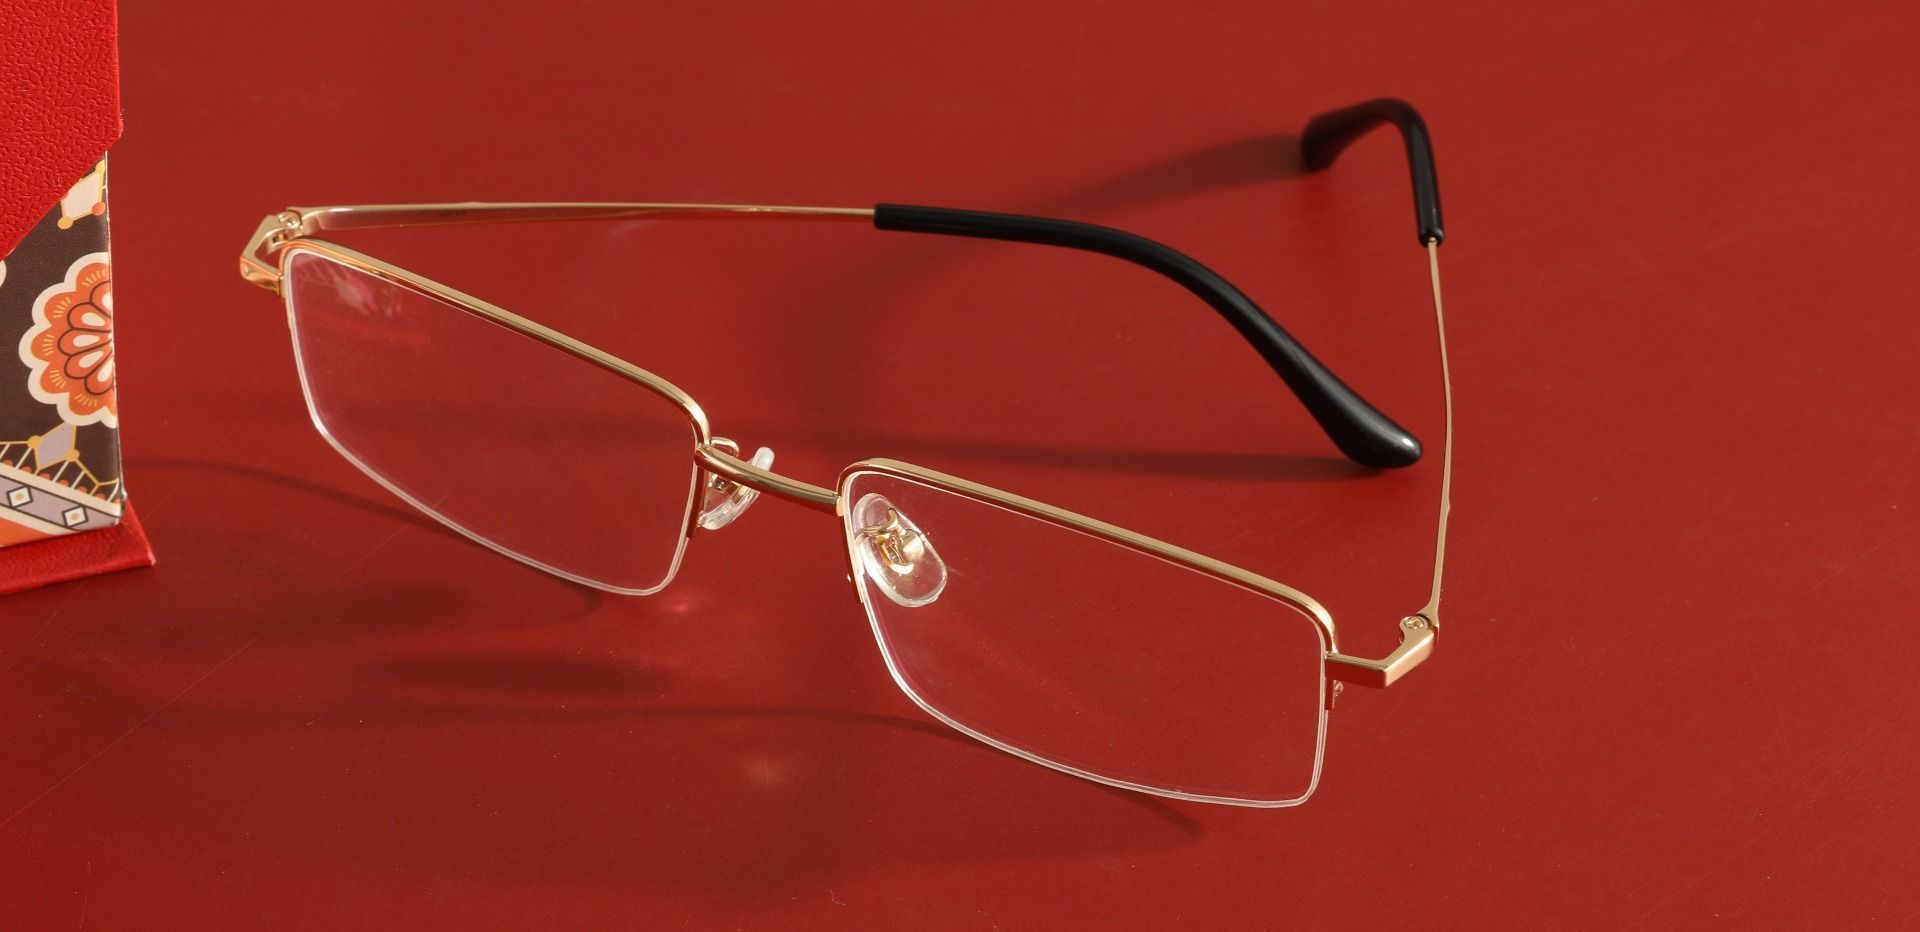 Wayne Rectangle Non-Rx Glasses - Gold